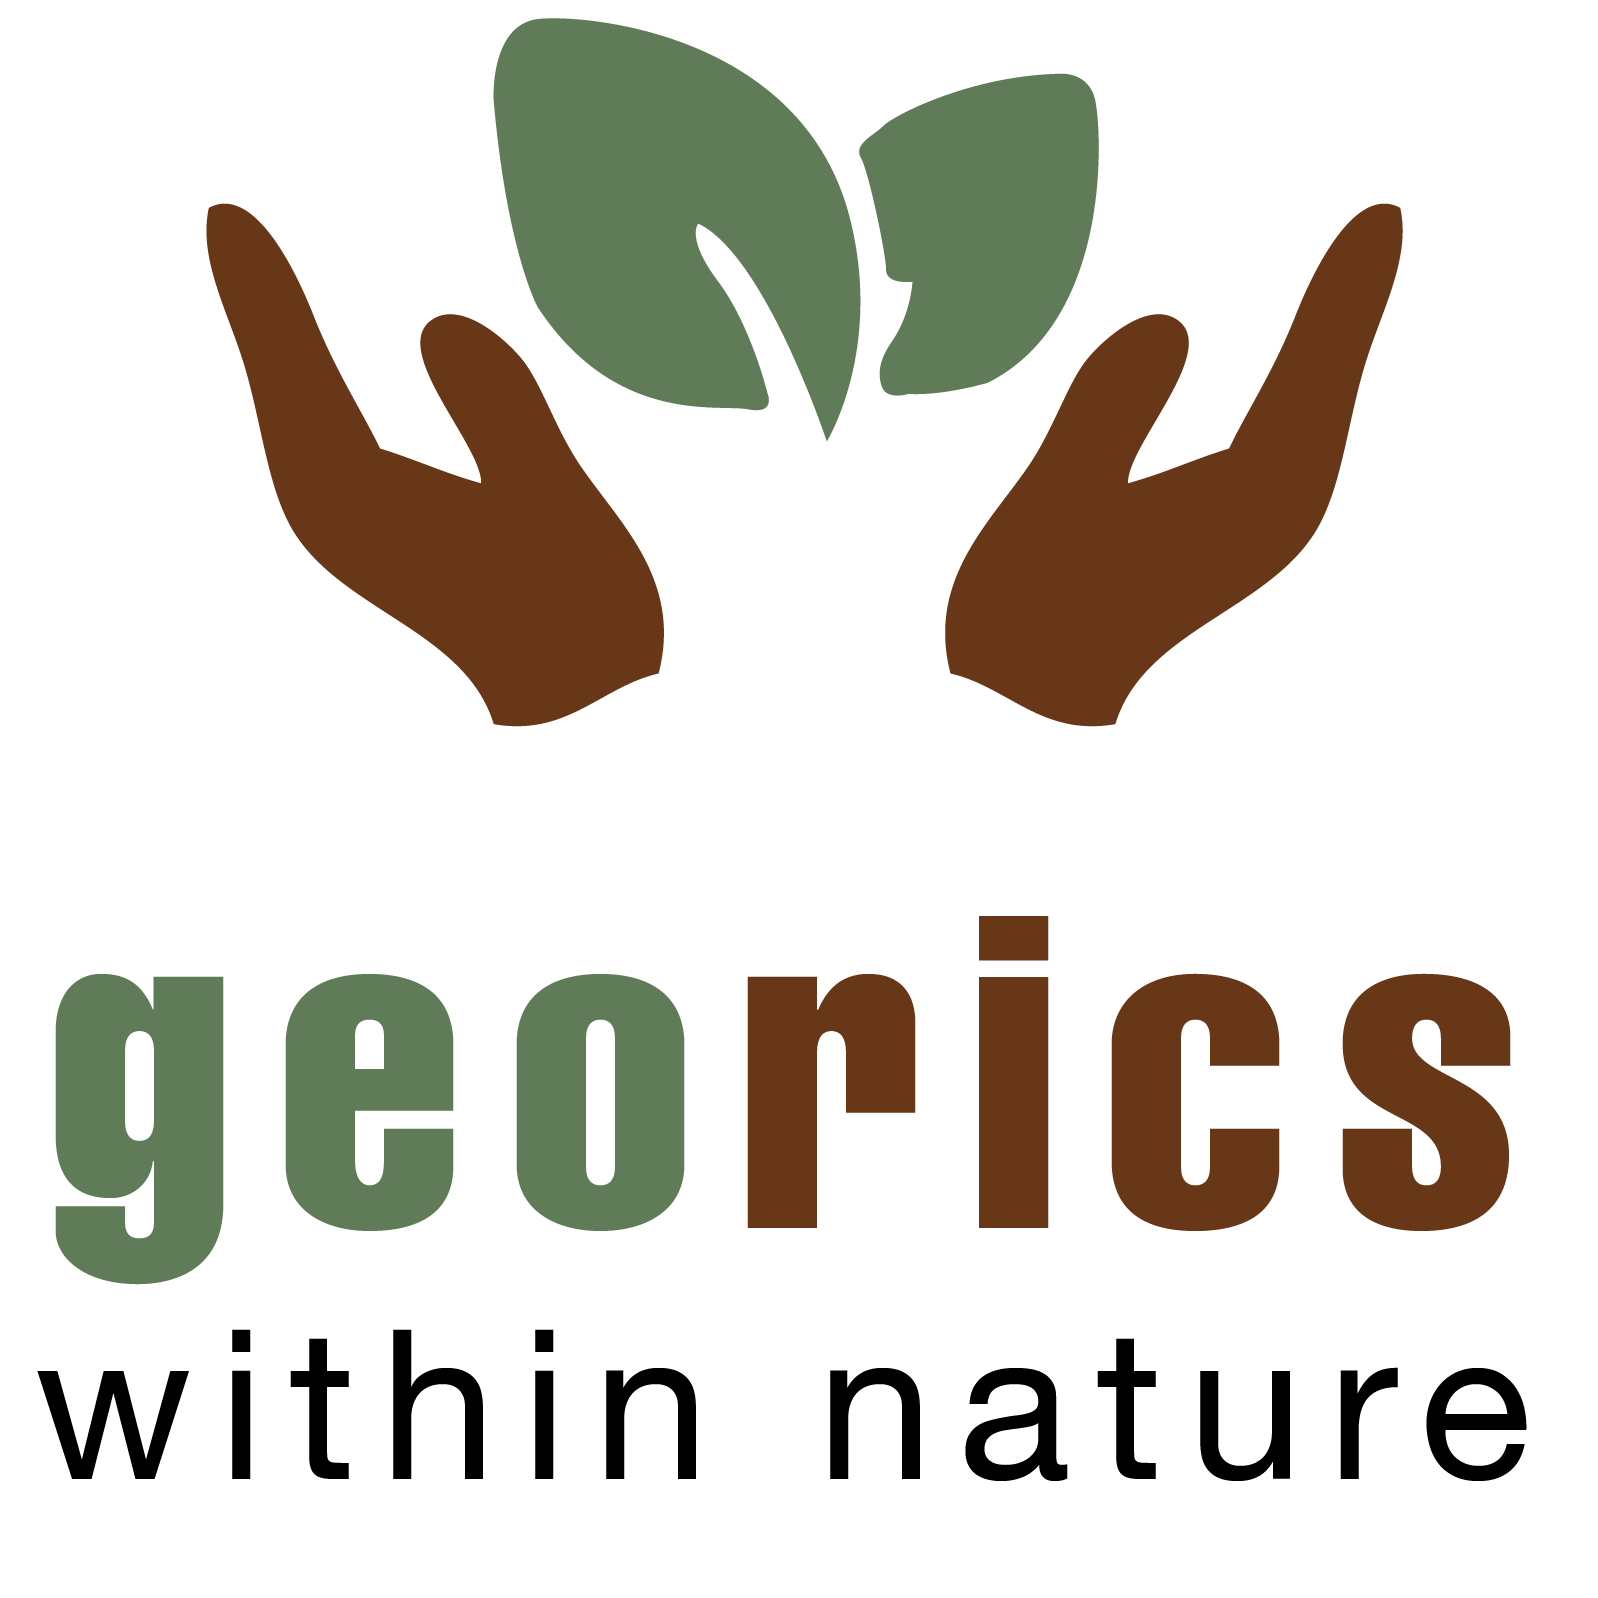 georics logo